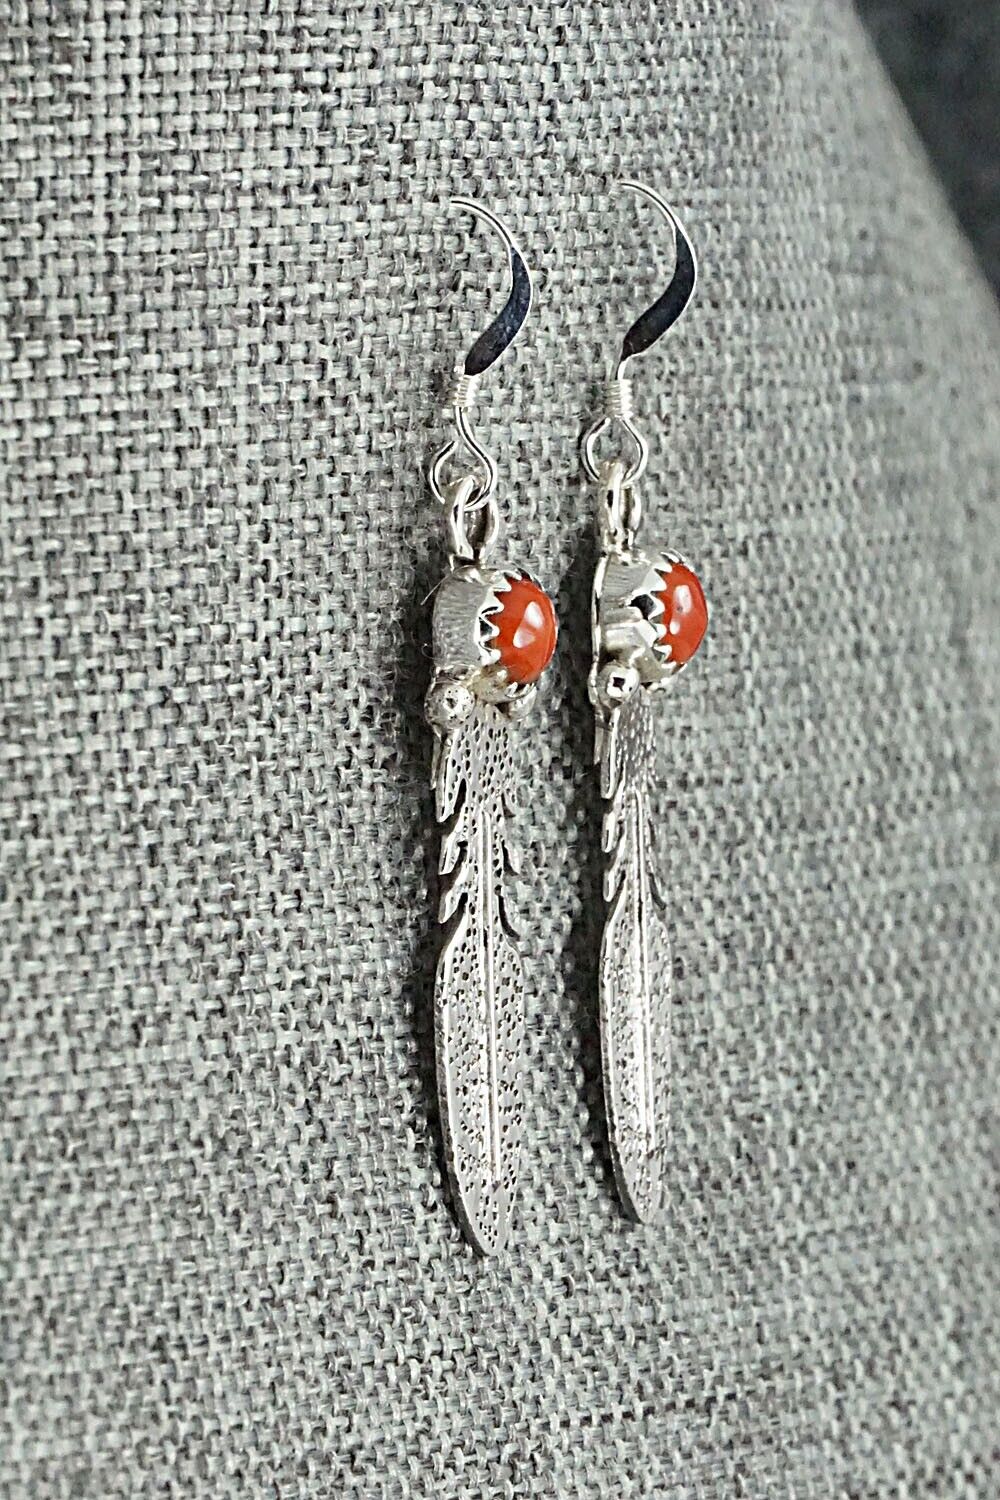 Coral & Sterling Silver Earrings - Rita Largo